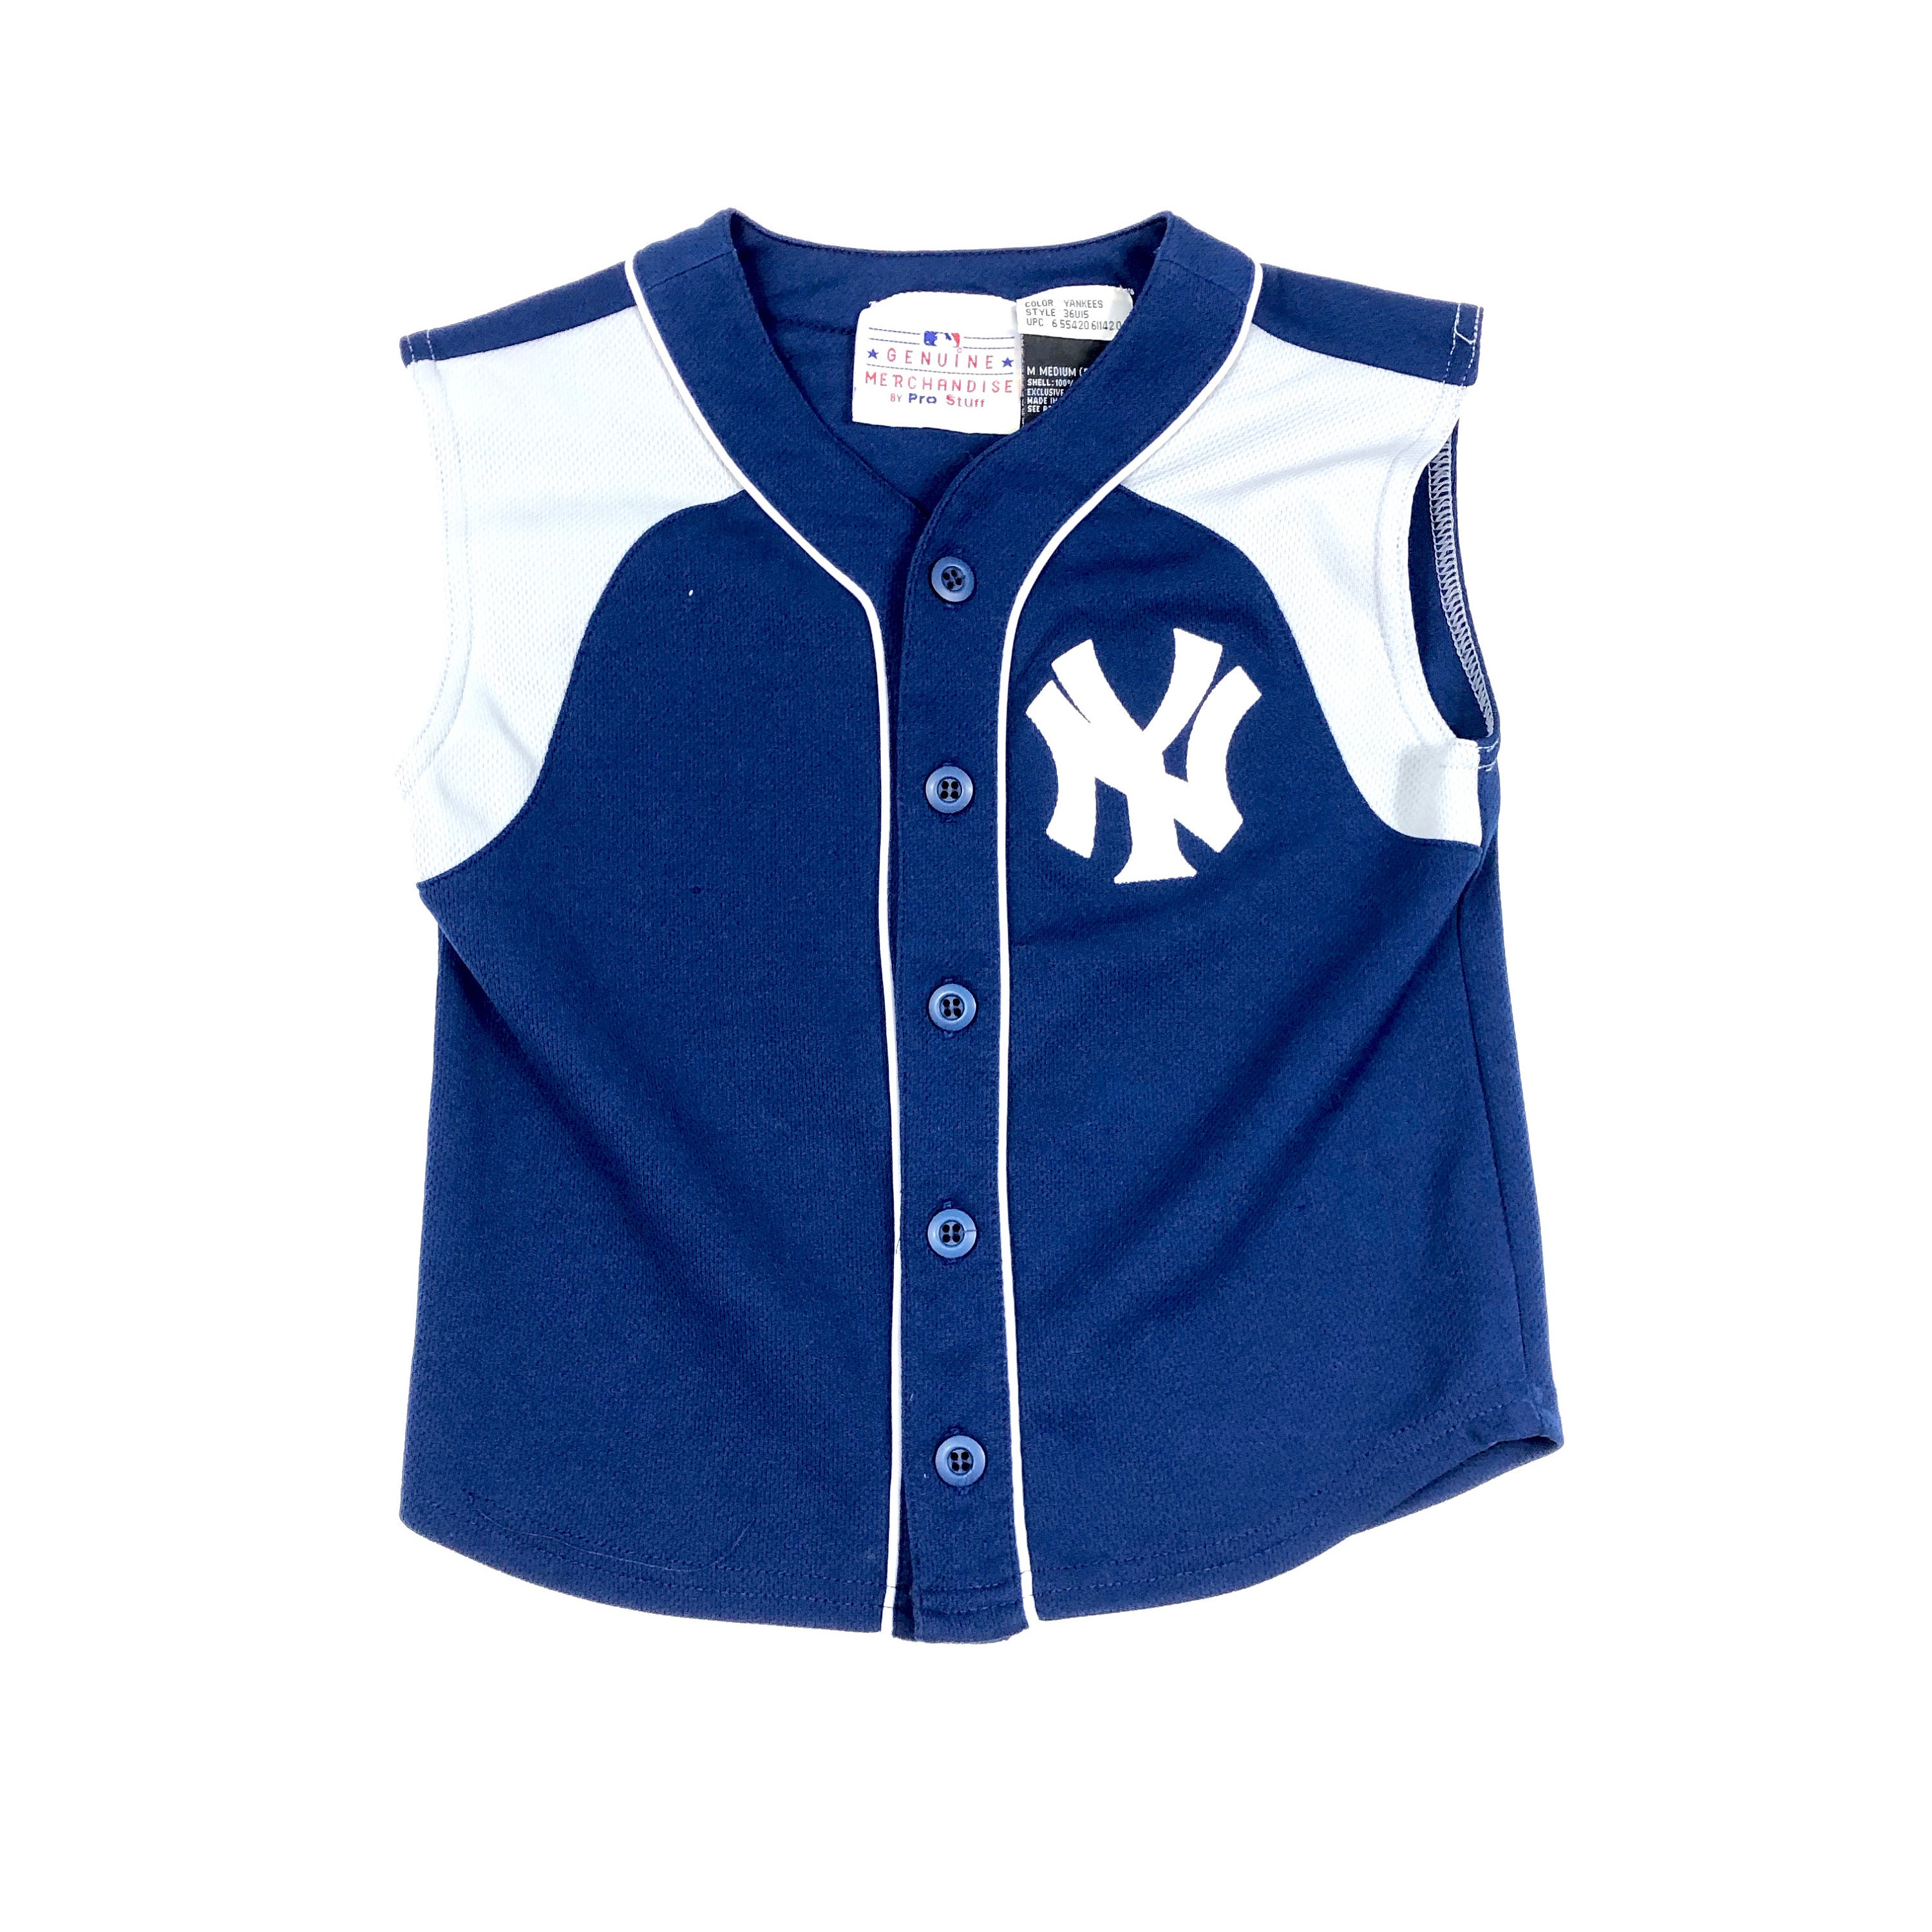 Kids NY Yankees sleeveless jersey, Vintage kids New York Yankees